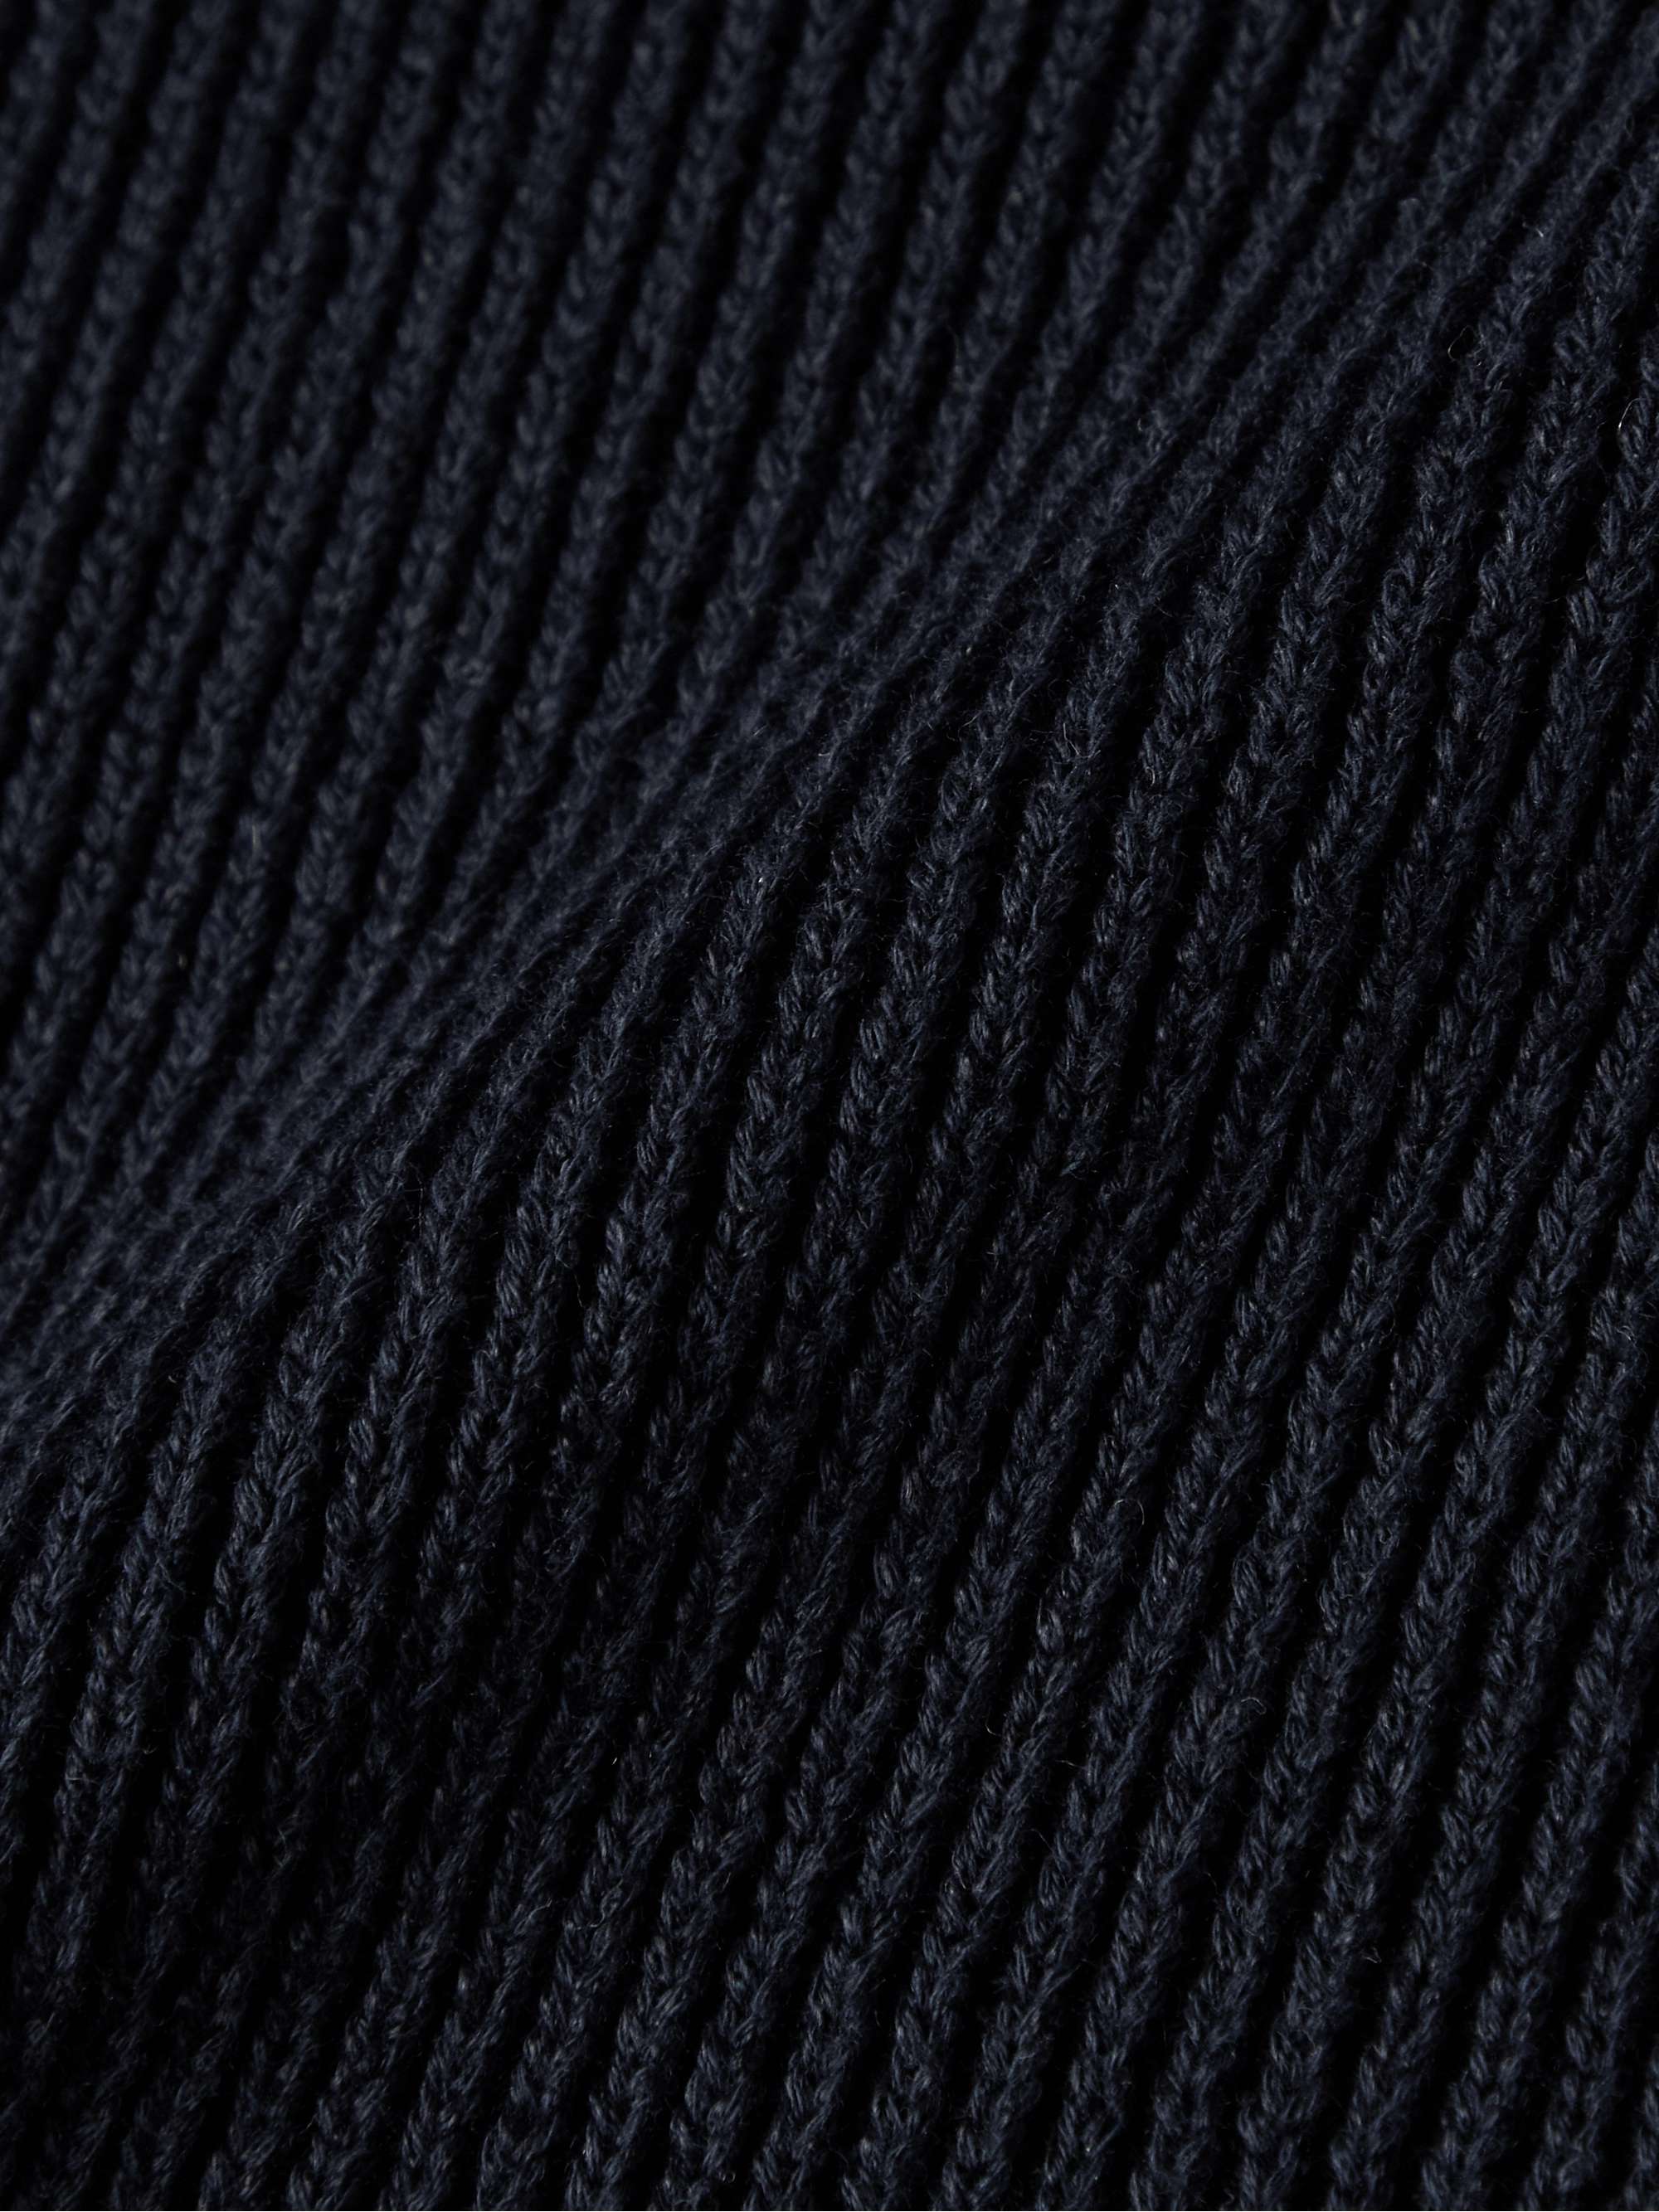 BARENA Slim-Fit Ribbed Linen and Cotton-Blend Zip-Up Cardigan